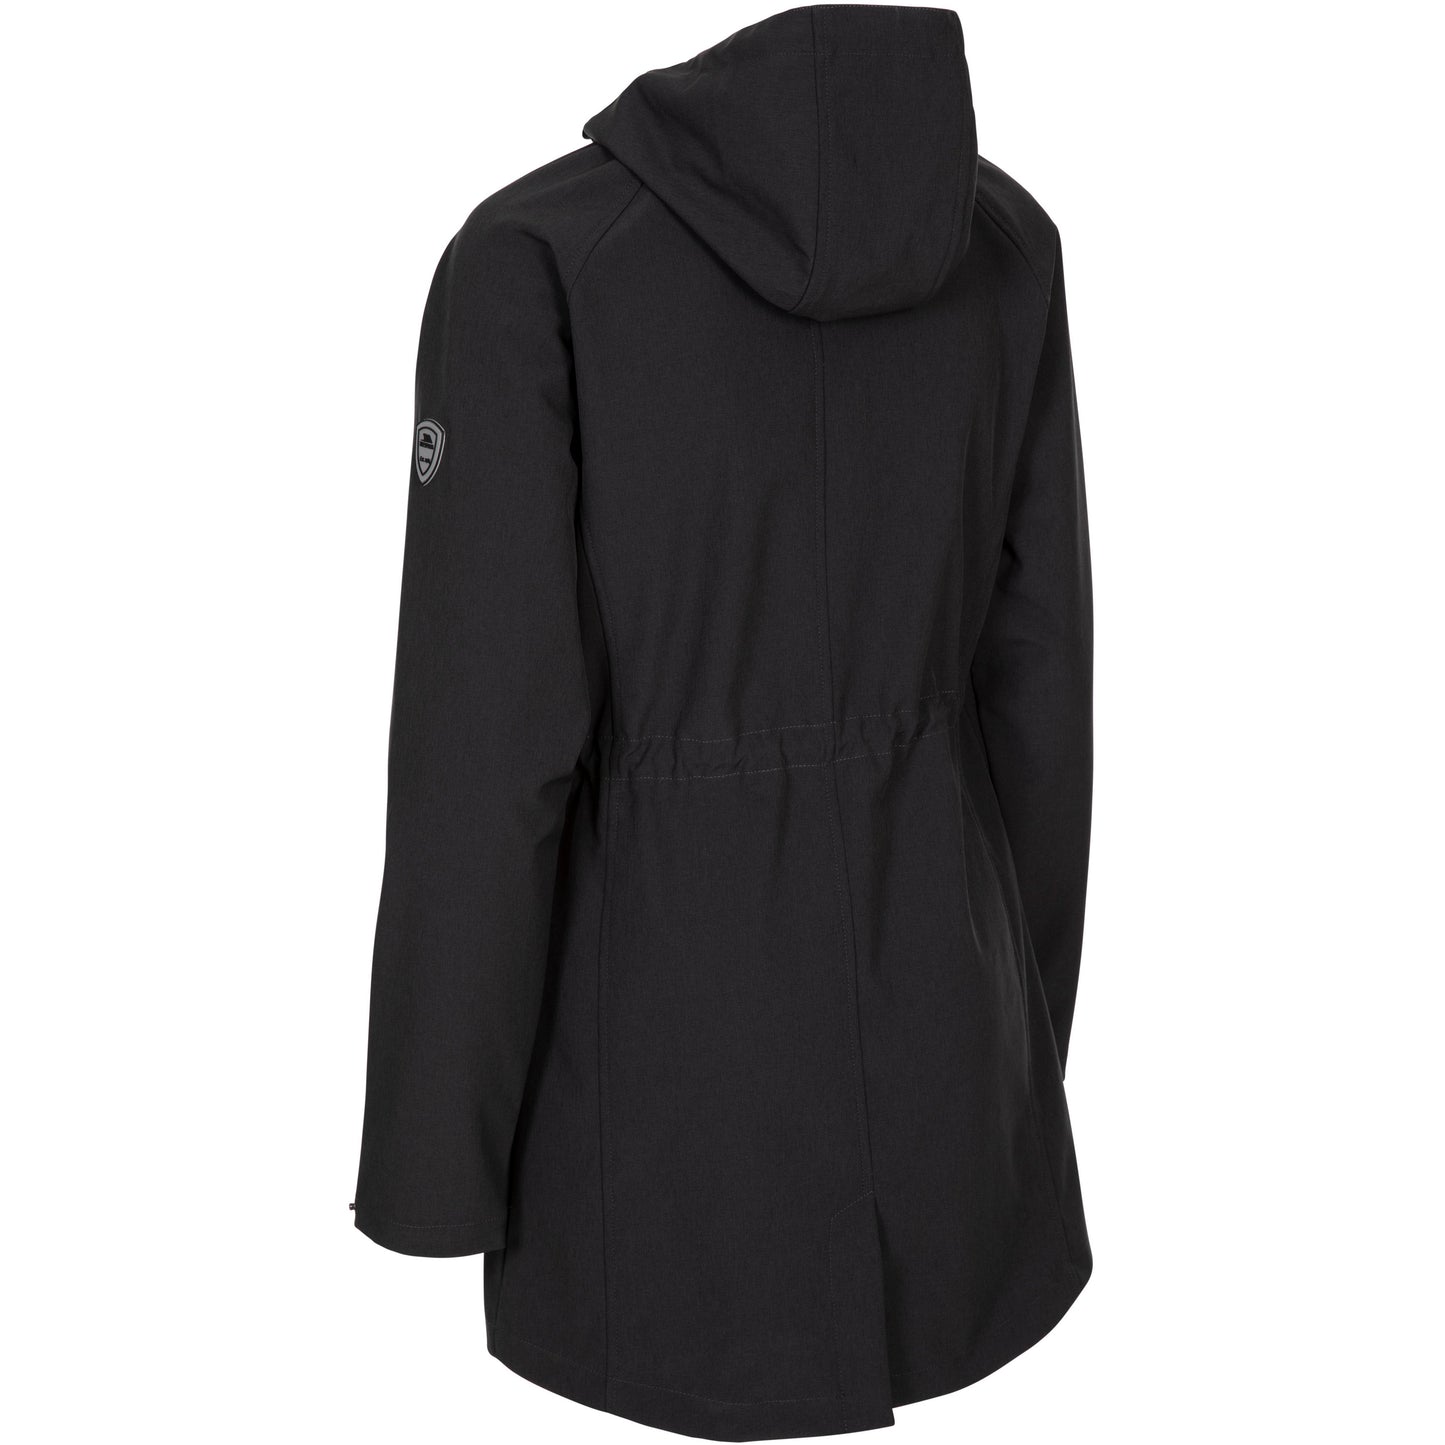 Adelaide Women's longer length Softshell Jacket in Dark Grey Marl